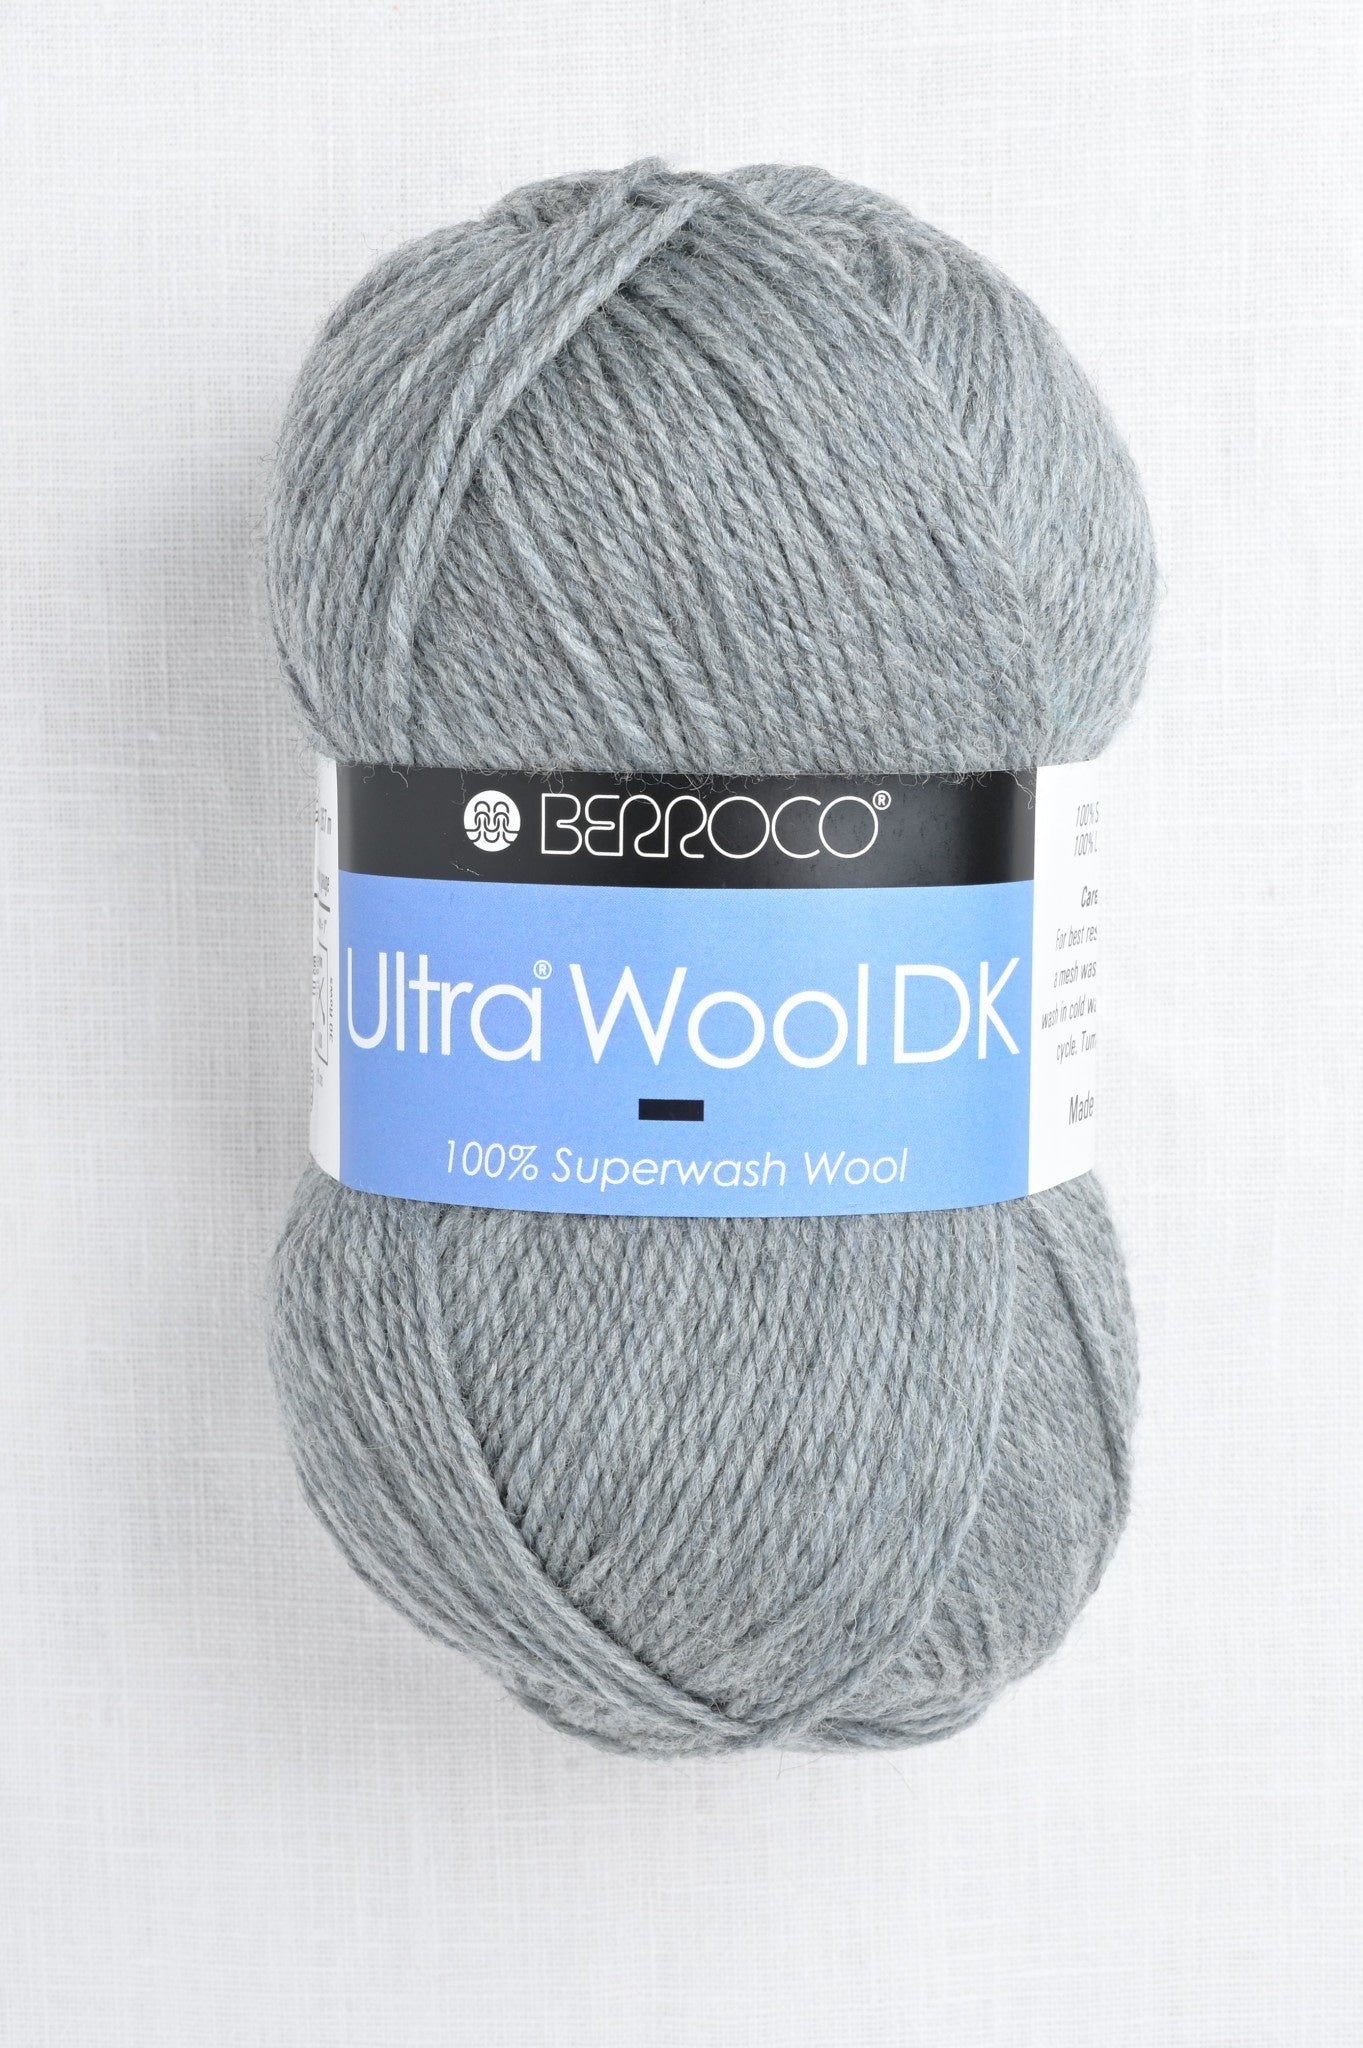 Berroco; Ultra Wool DK; Fog 83109